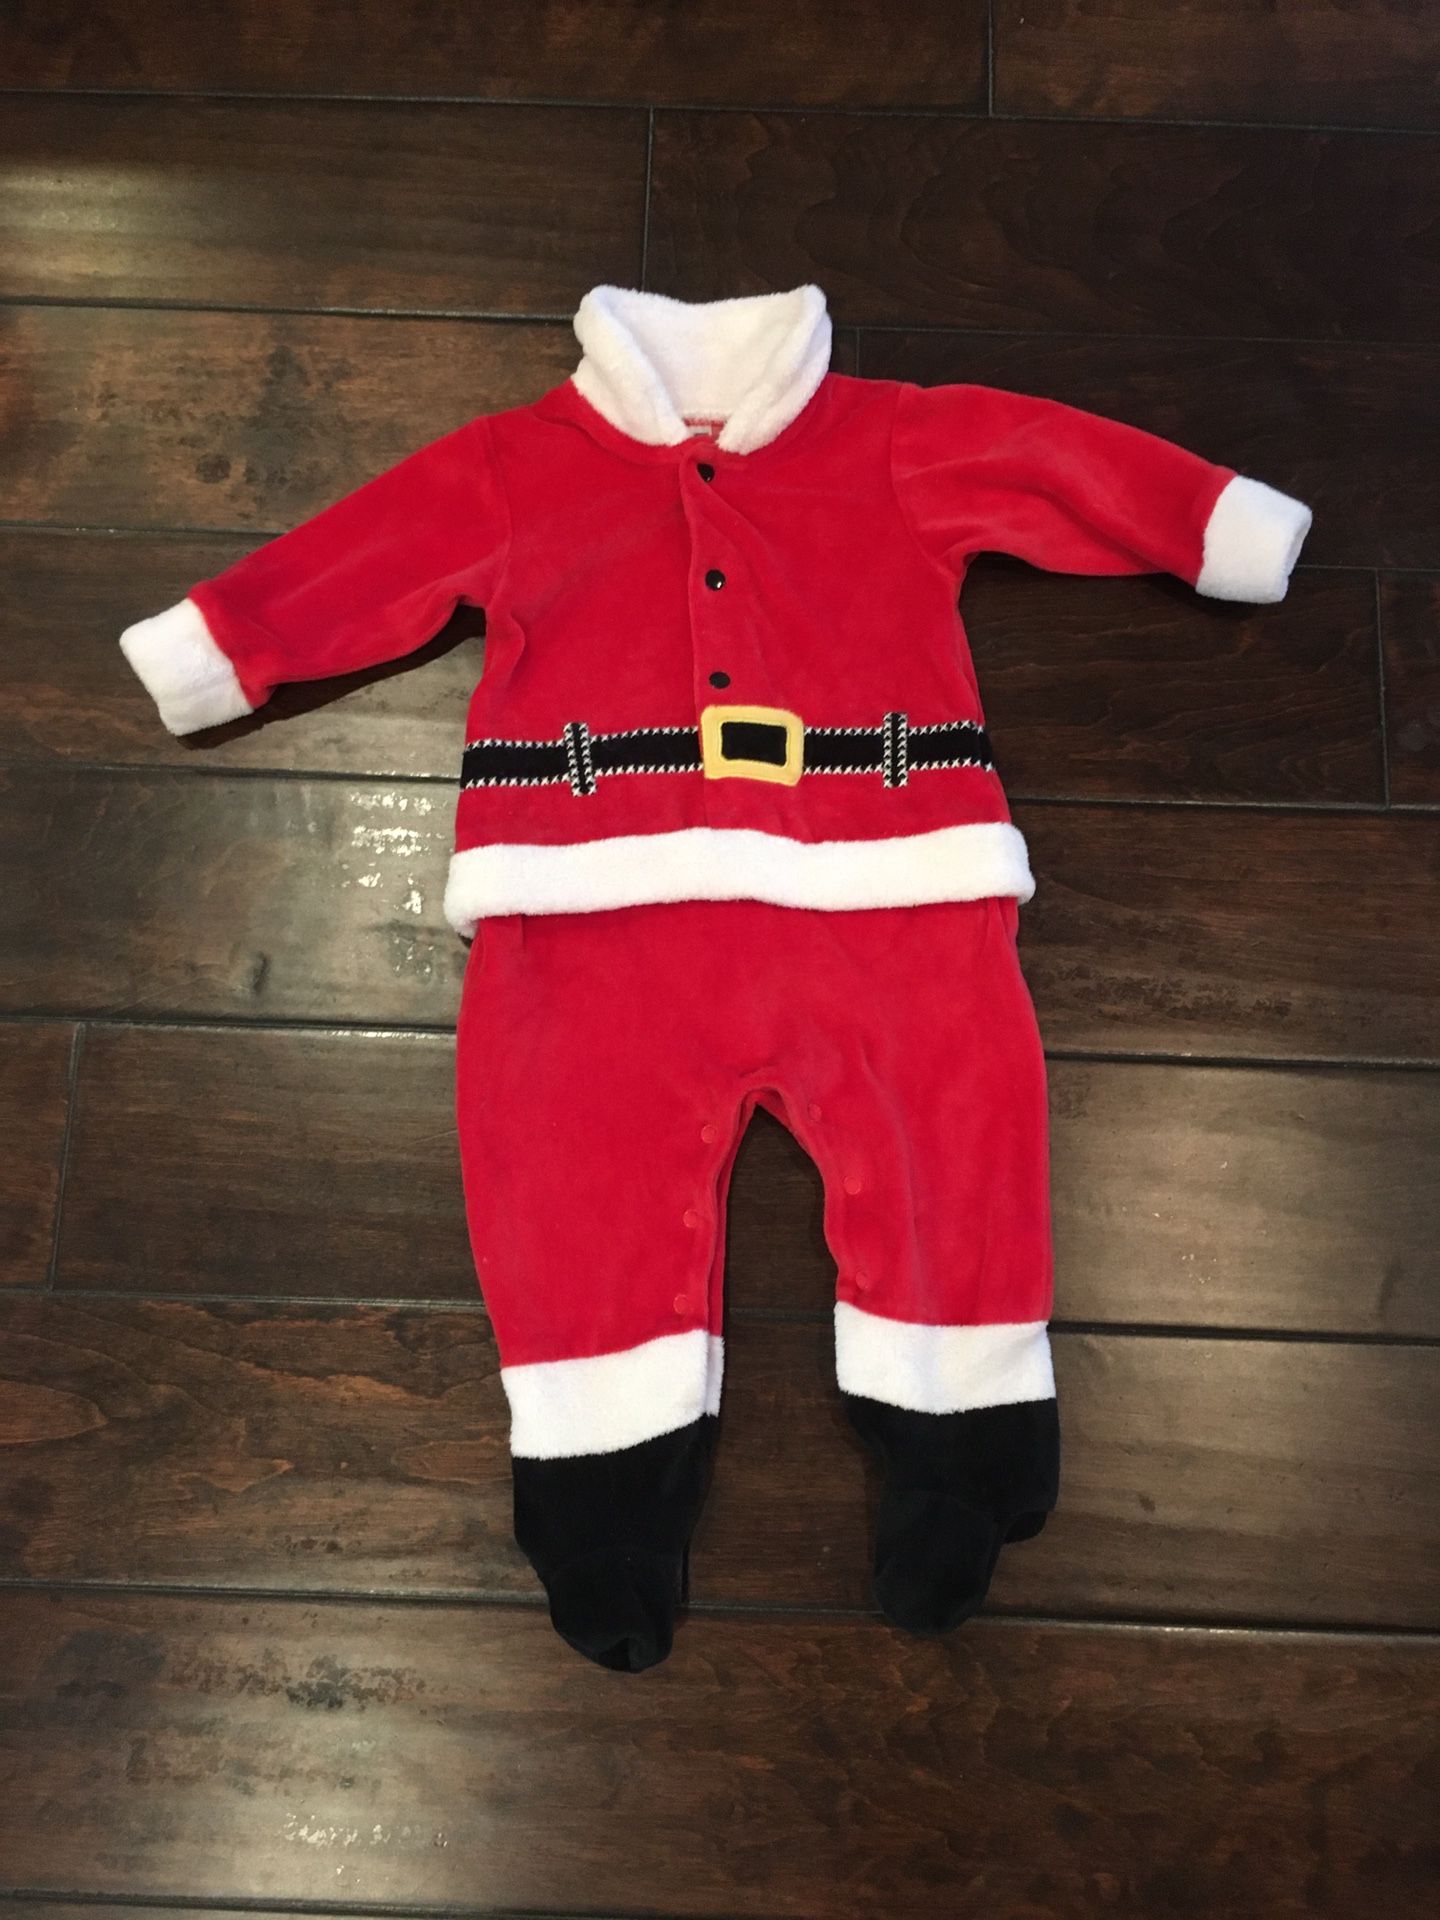 Santa costume onesie baby clothes size 3- 6 months